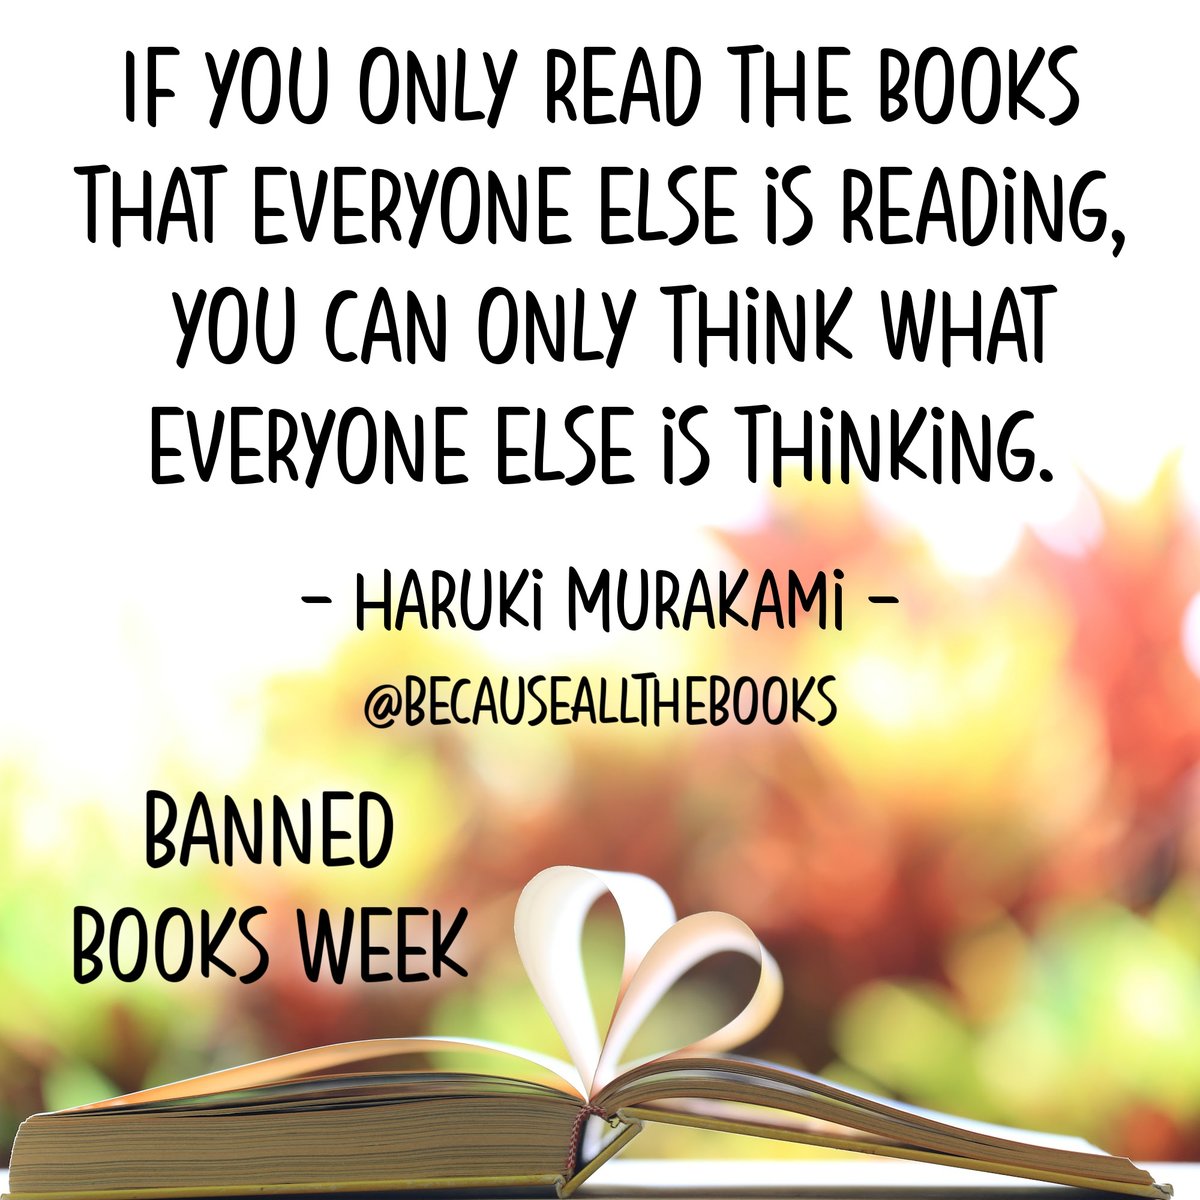 Heaven forbid! Think for yourself, read more books!

#BecauseAllTheBooks 
#BannedBooksWeek #ReadBannedBooks #BannedBooks #ReadMoreBooks #NeverStopReading #ReadingIsKnowledge #NeedMoreBooks #BooksAreMyLife